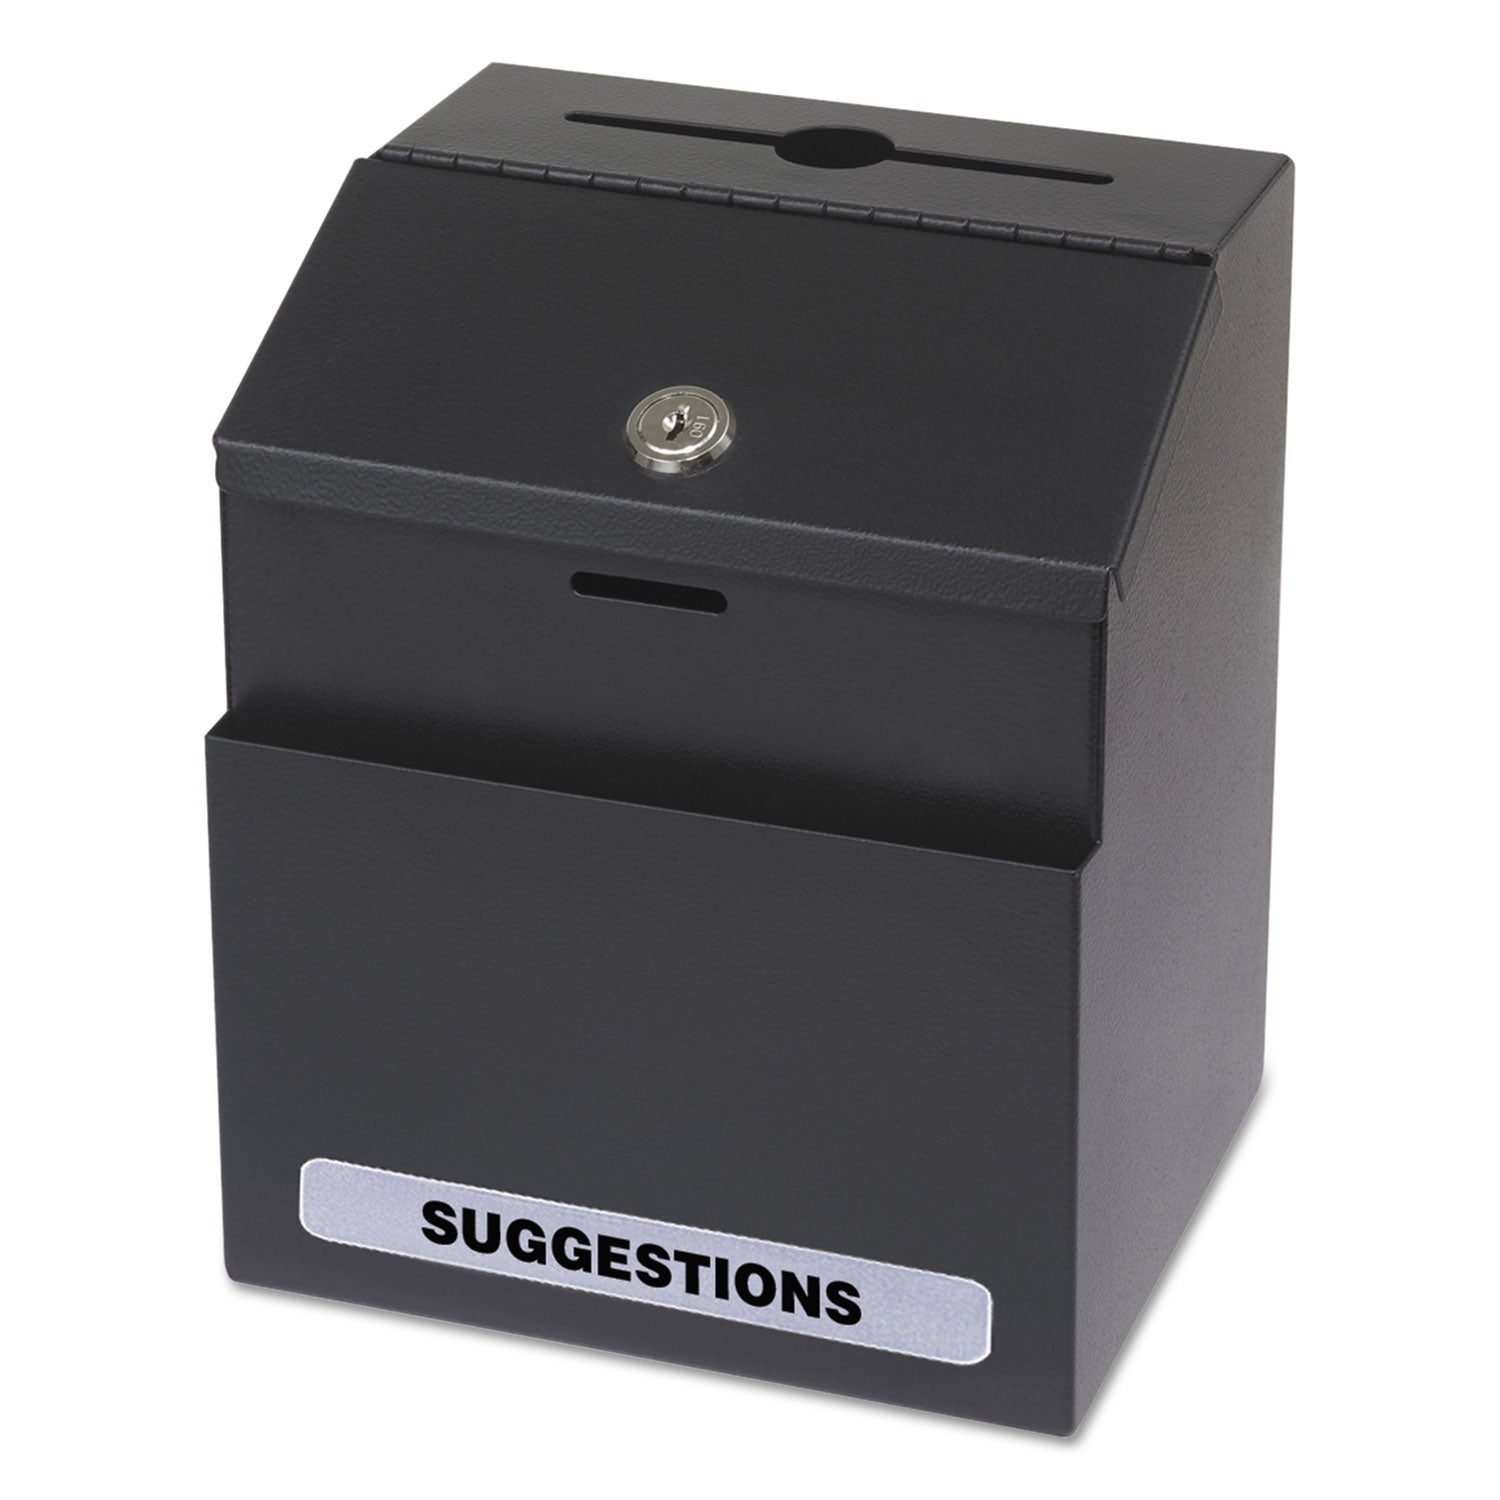 Steel Suggestion/Key Drop Box with Locking Top, 7 x 6 x 8.5, Black Powder Coat Finish - 